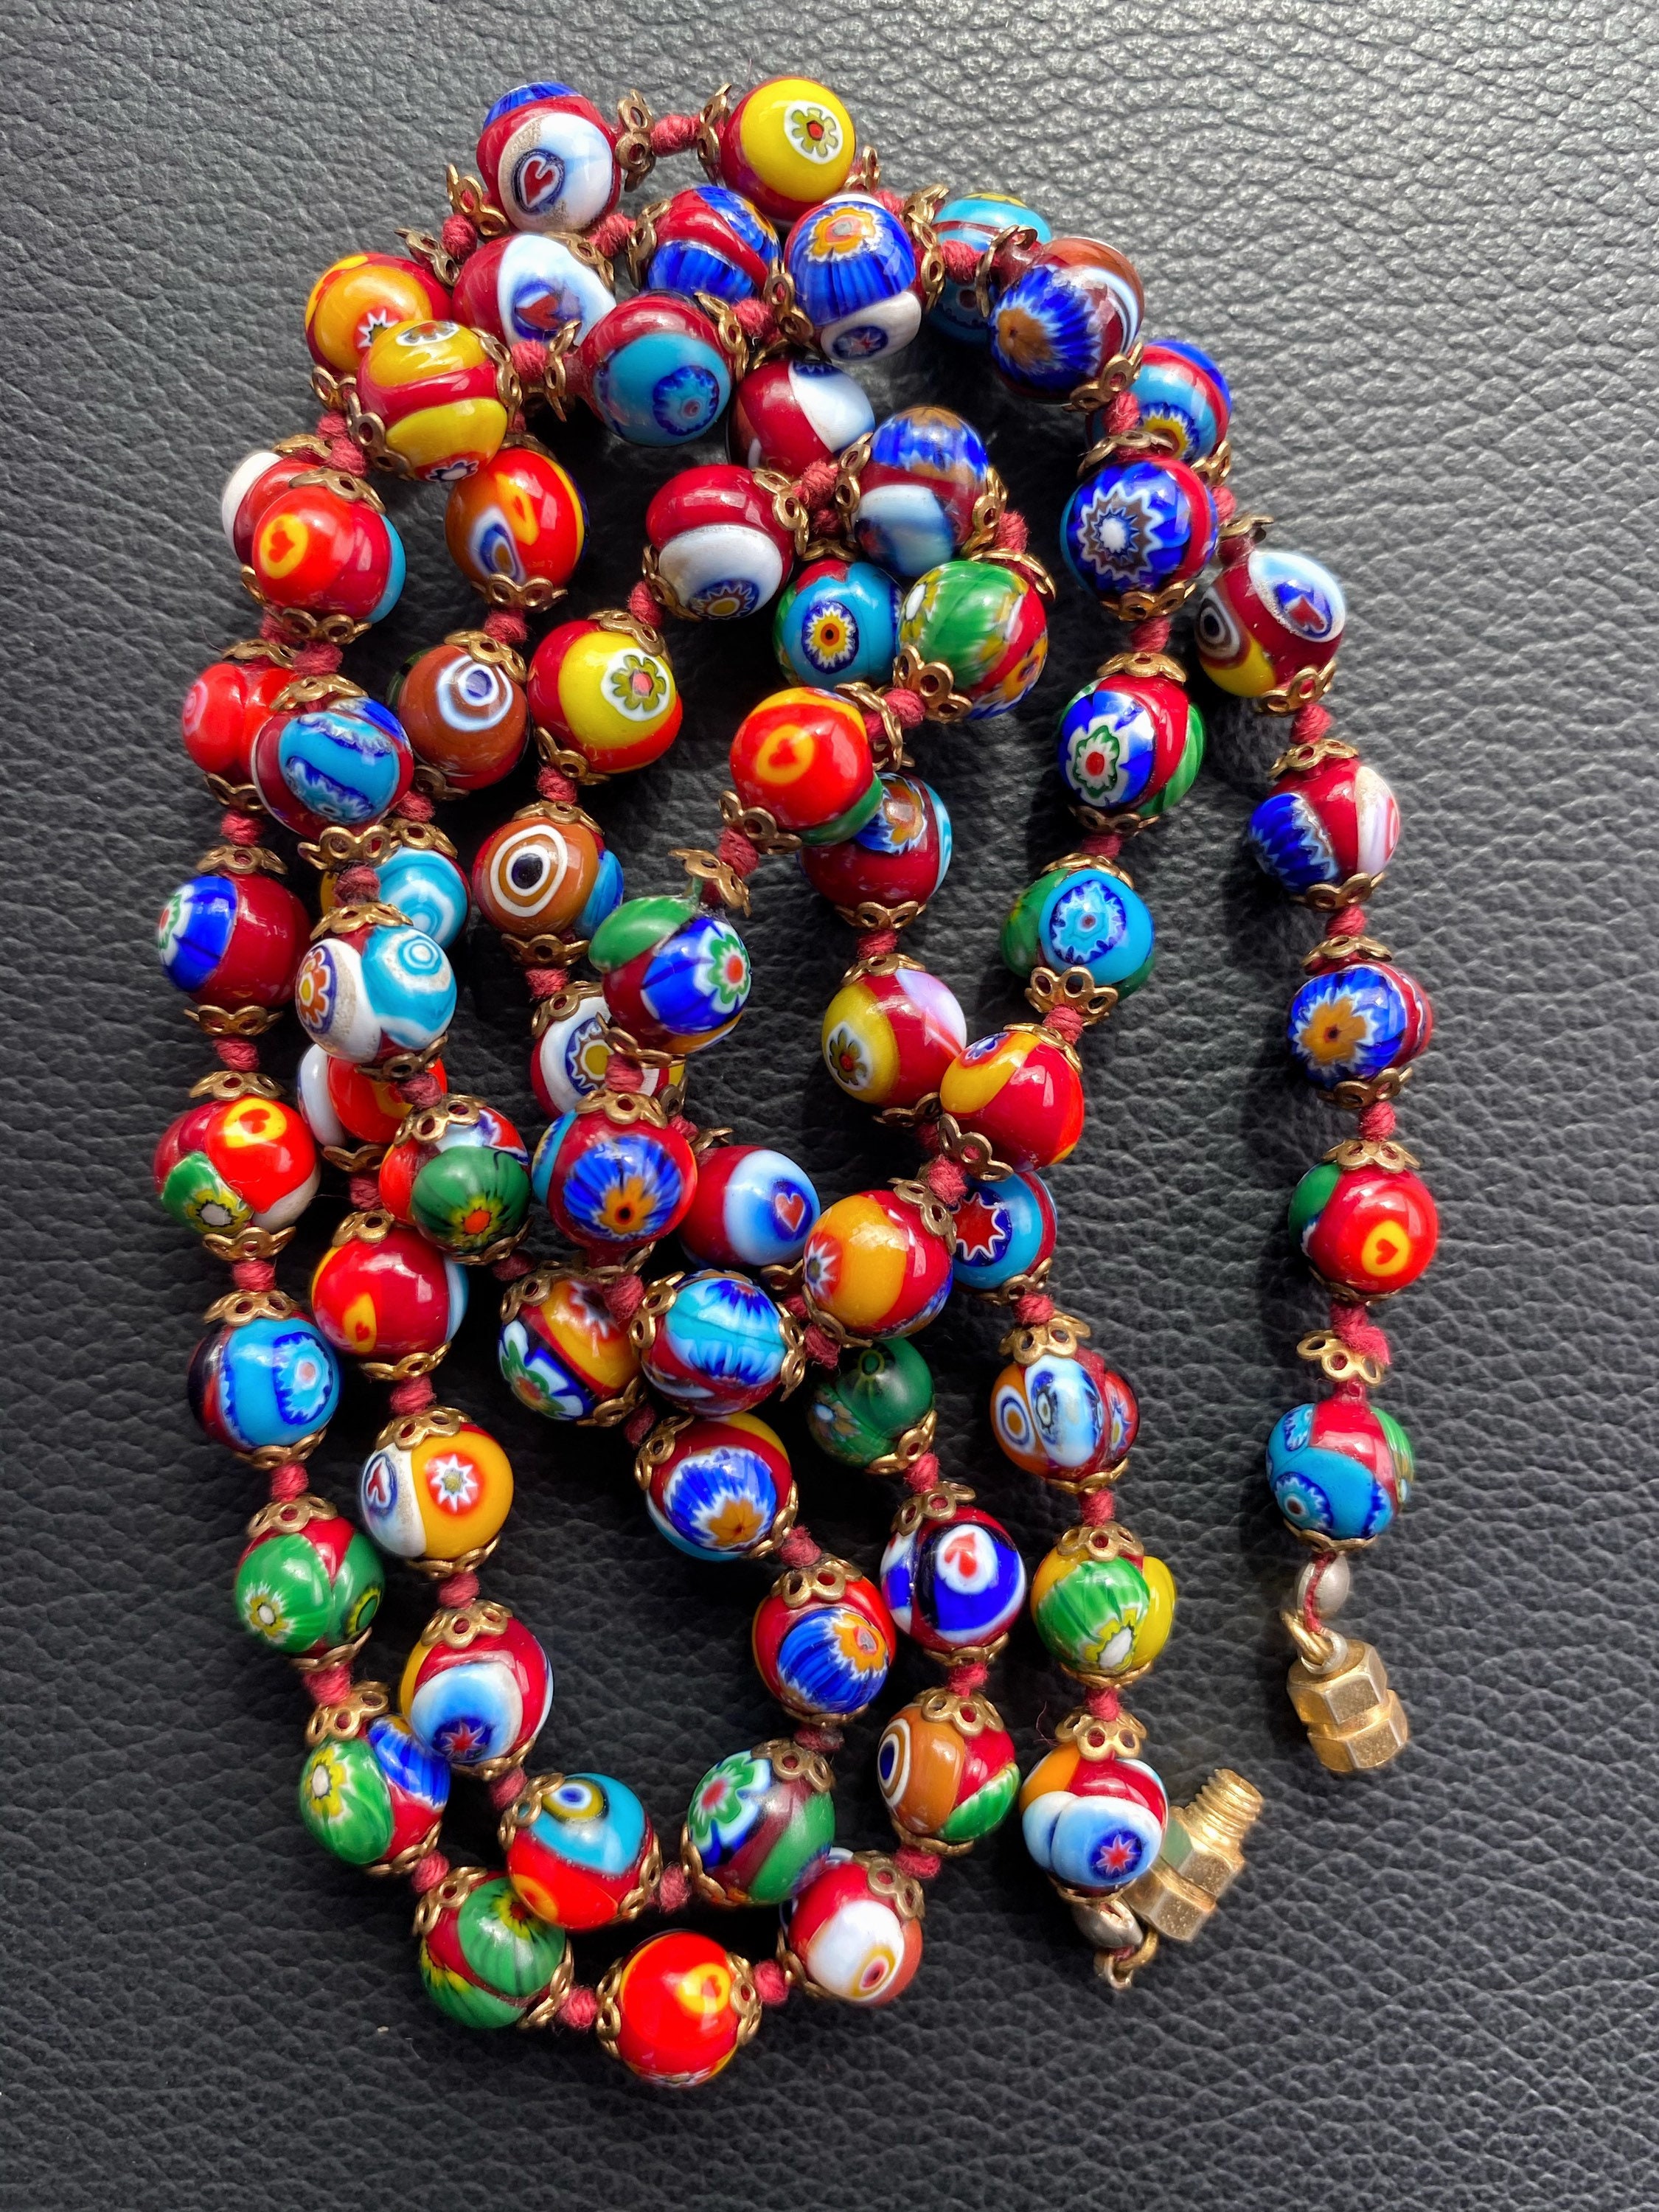 Coney Island Candy Necklace Rainbow - Handmade Jewelry